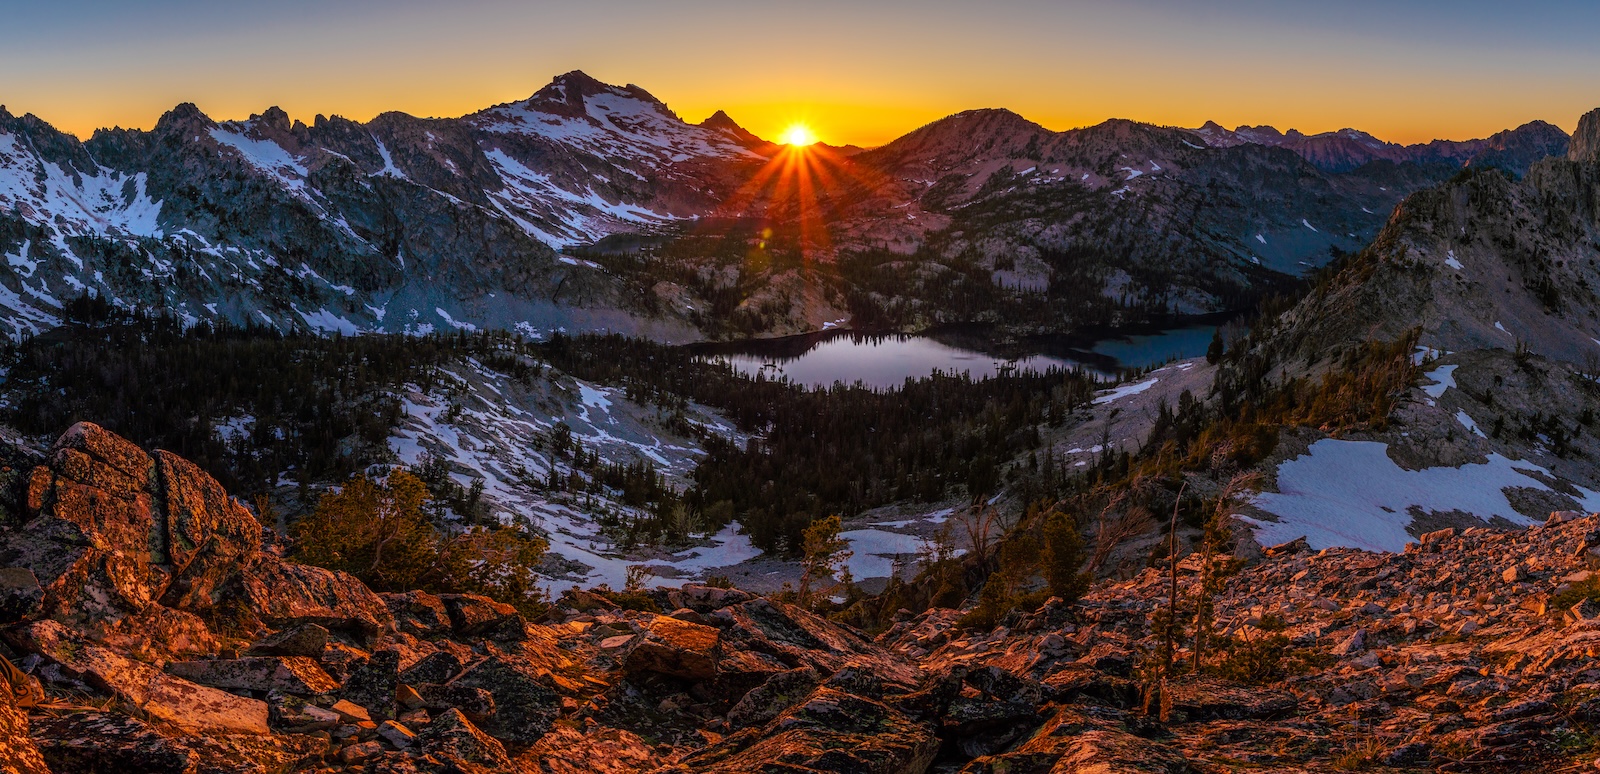 Sunset in Idaho's Sawtooth Mountains. Photo by Brock Dallman